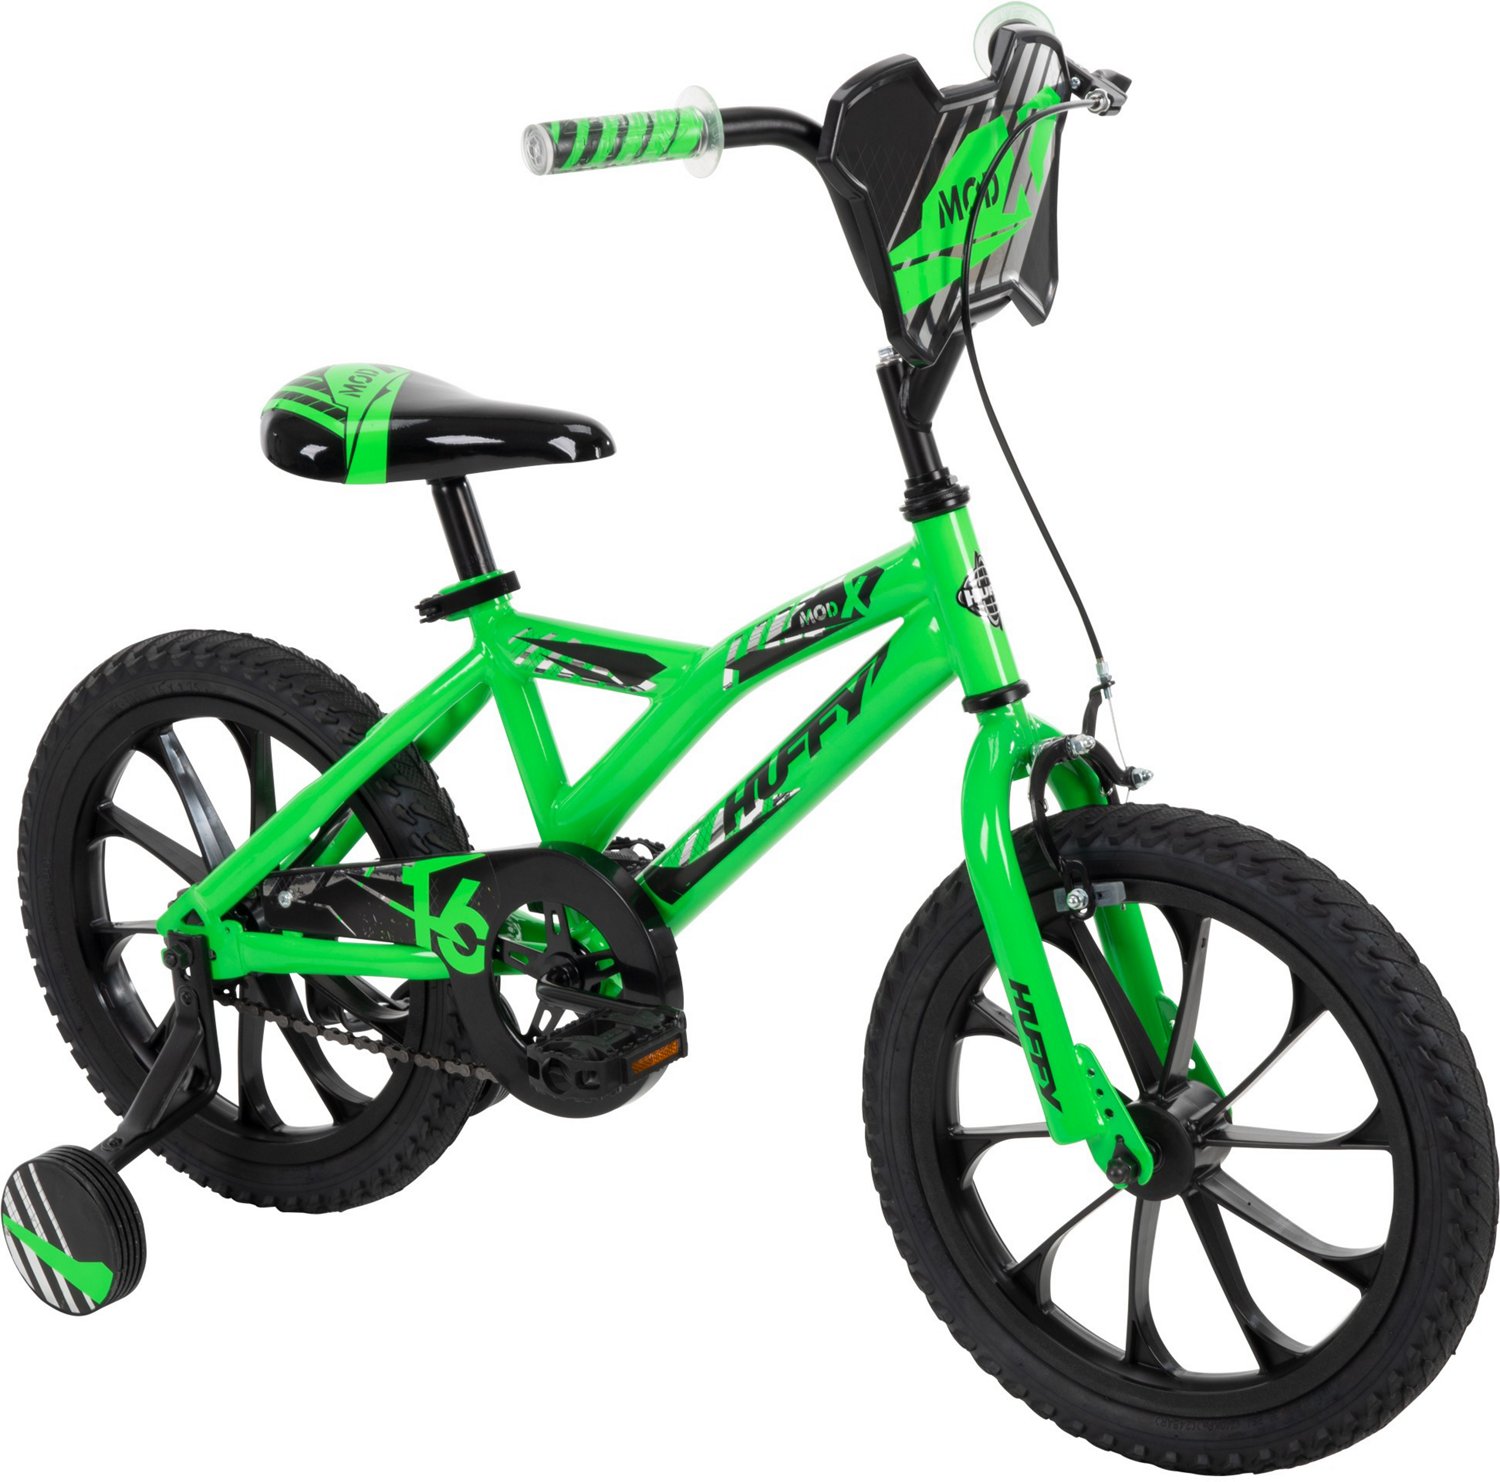 Huffy 18u0022 Mod X Kids Bike, Black/Green - 21900